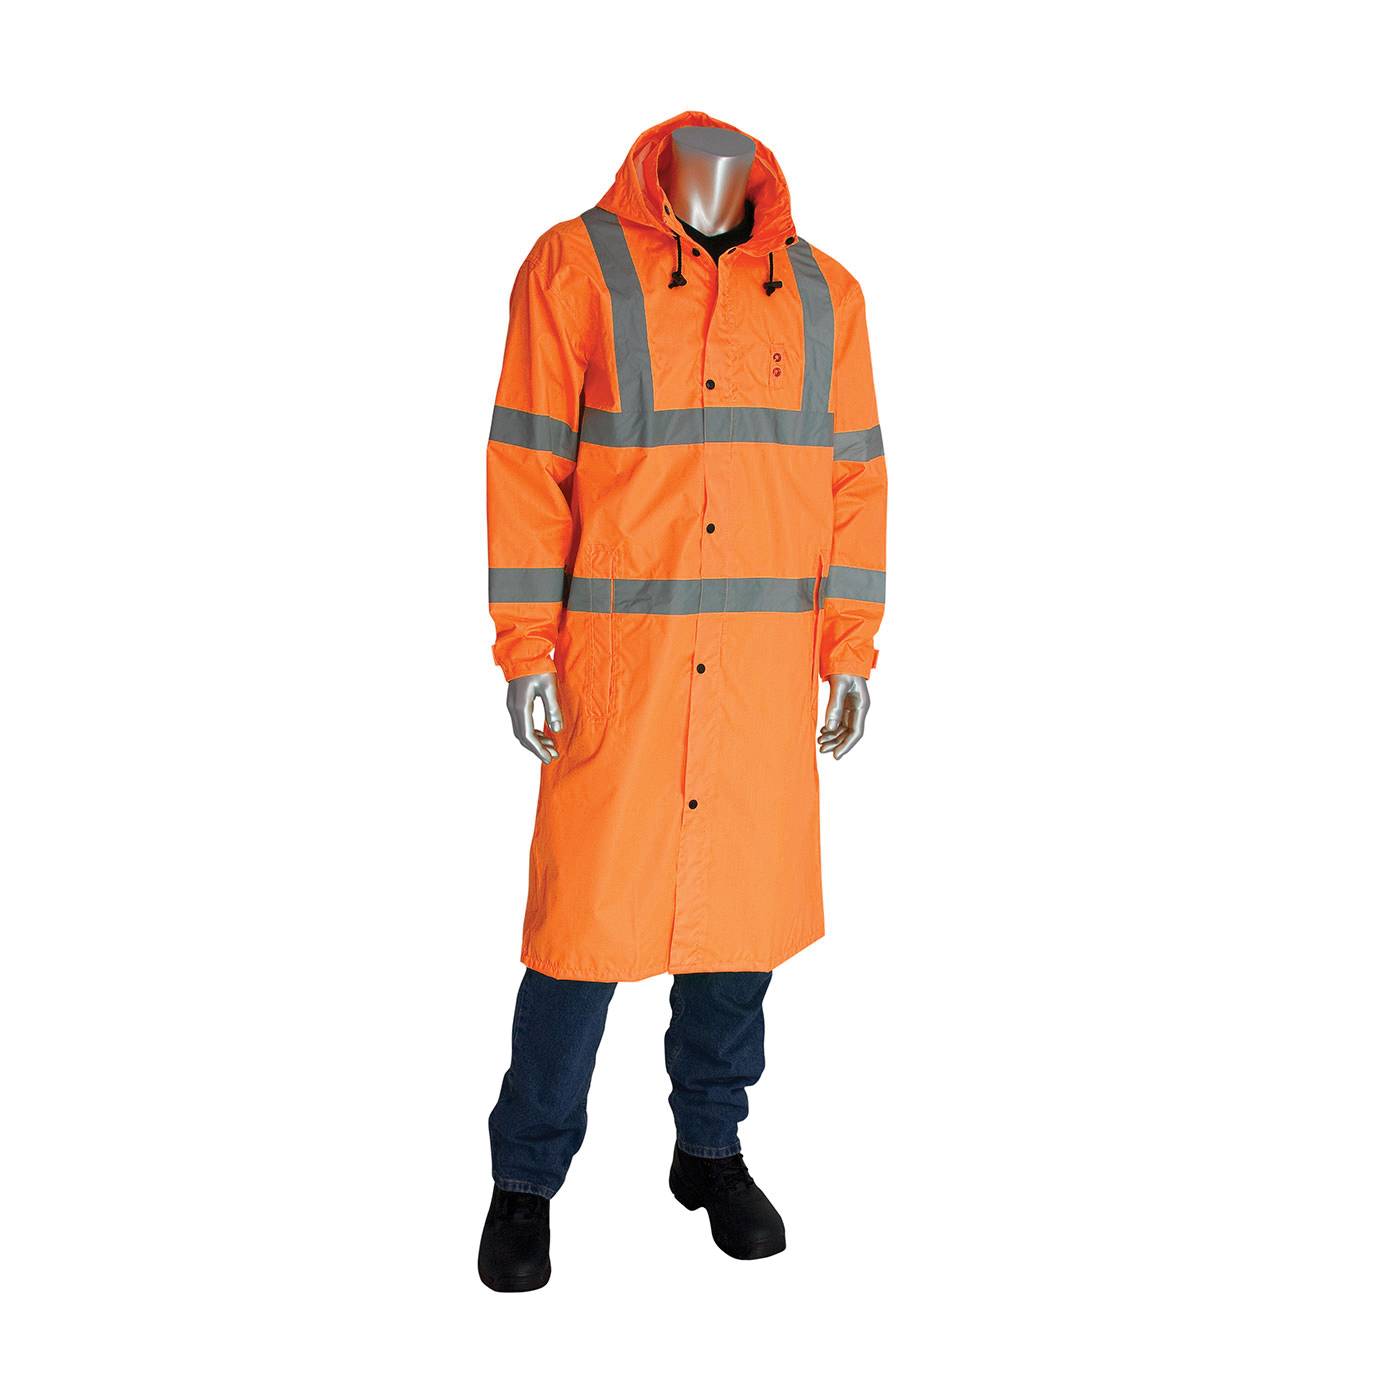 PIP® FALCON™ Viz™ 353-1048-OR/S All Purpose Waterproof Rain Coat, S, Hi-Viz Orange, 150D Polyester Coated with Polyurethane, Resists: Water, ANSI 107 Type R Class 3, Concealed Hood